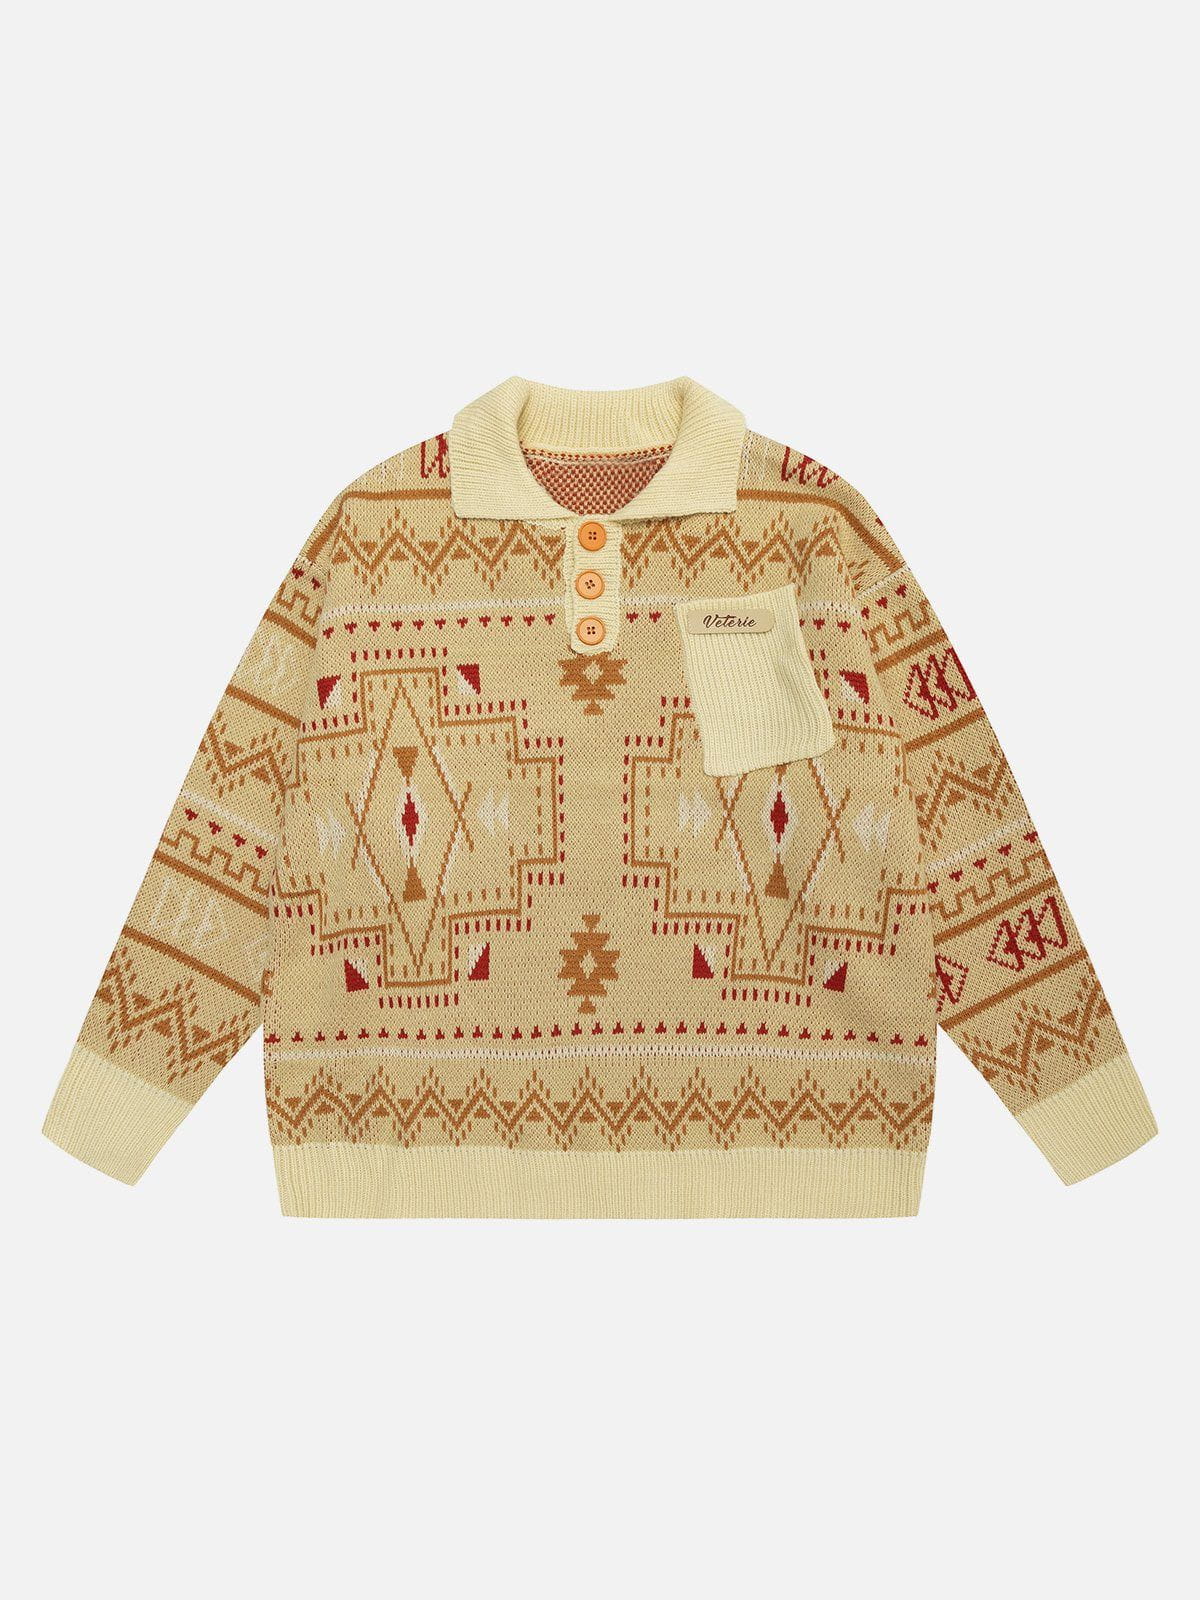 Majesda® - Vintage Pocket Trim Sweater outfit ideas streetwear fashion